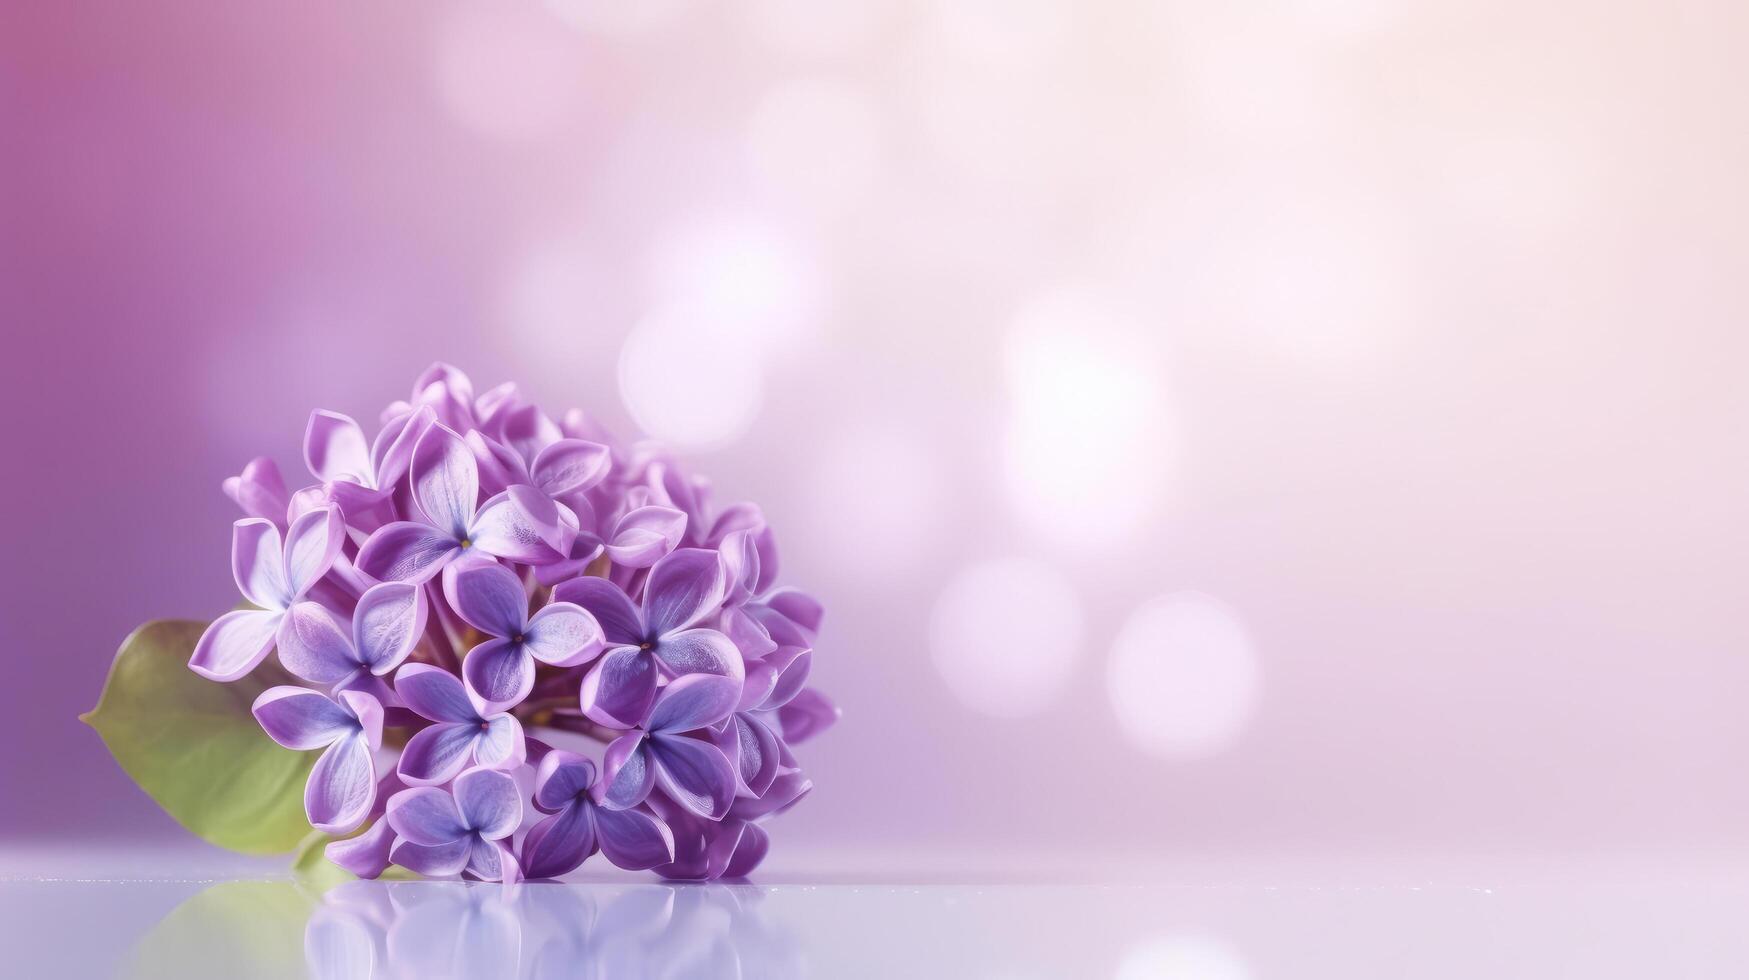 Lilac flower bokeh background. Illustration photo